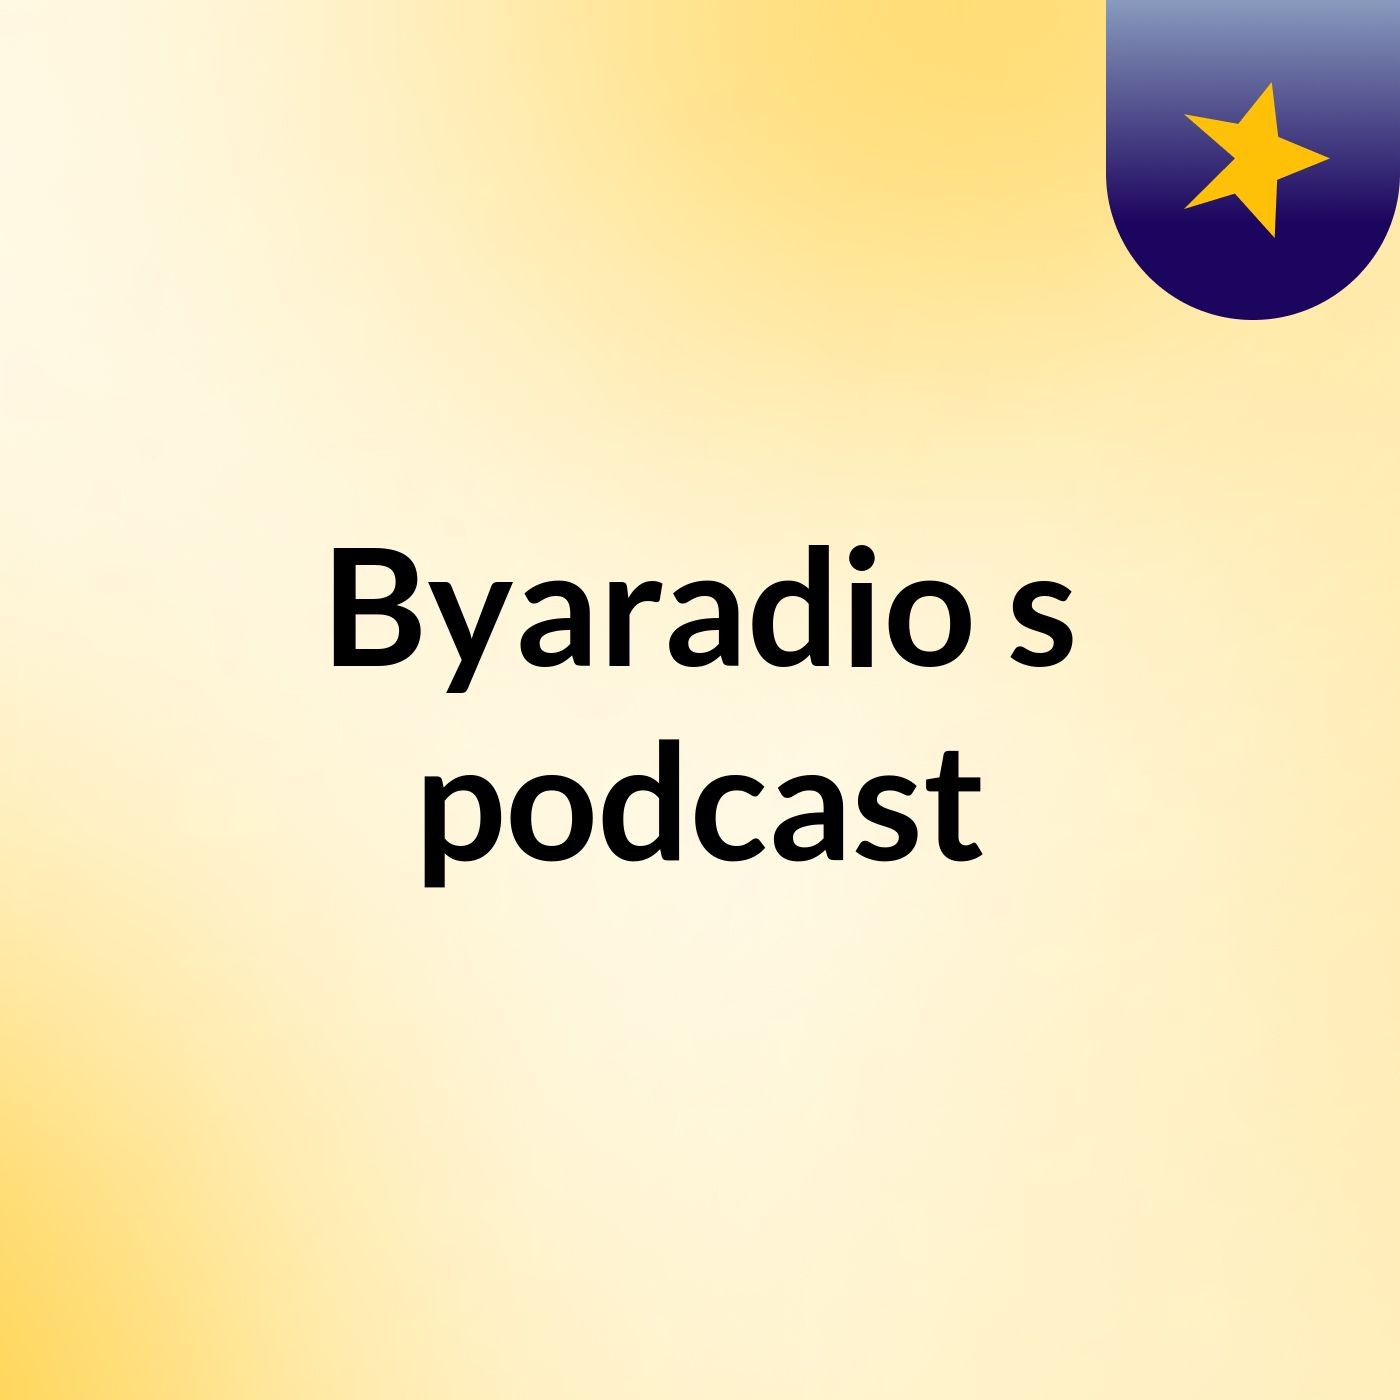 Byaradio's podcast